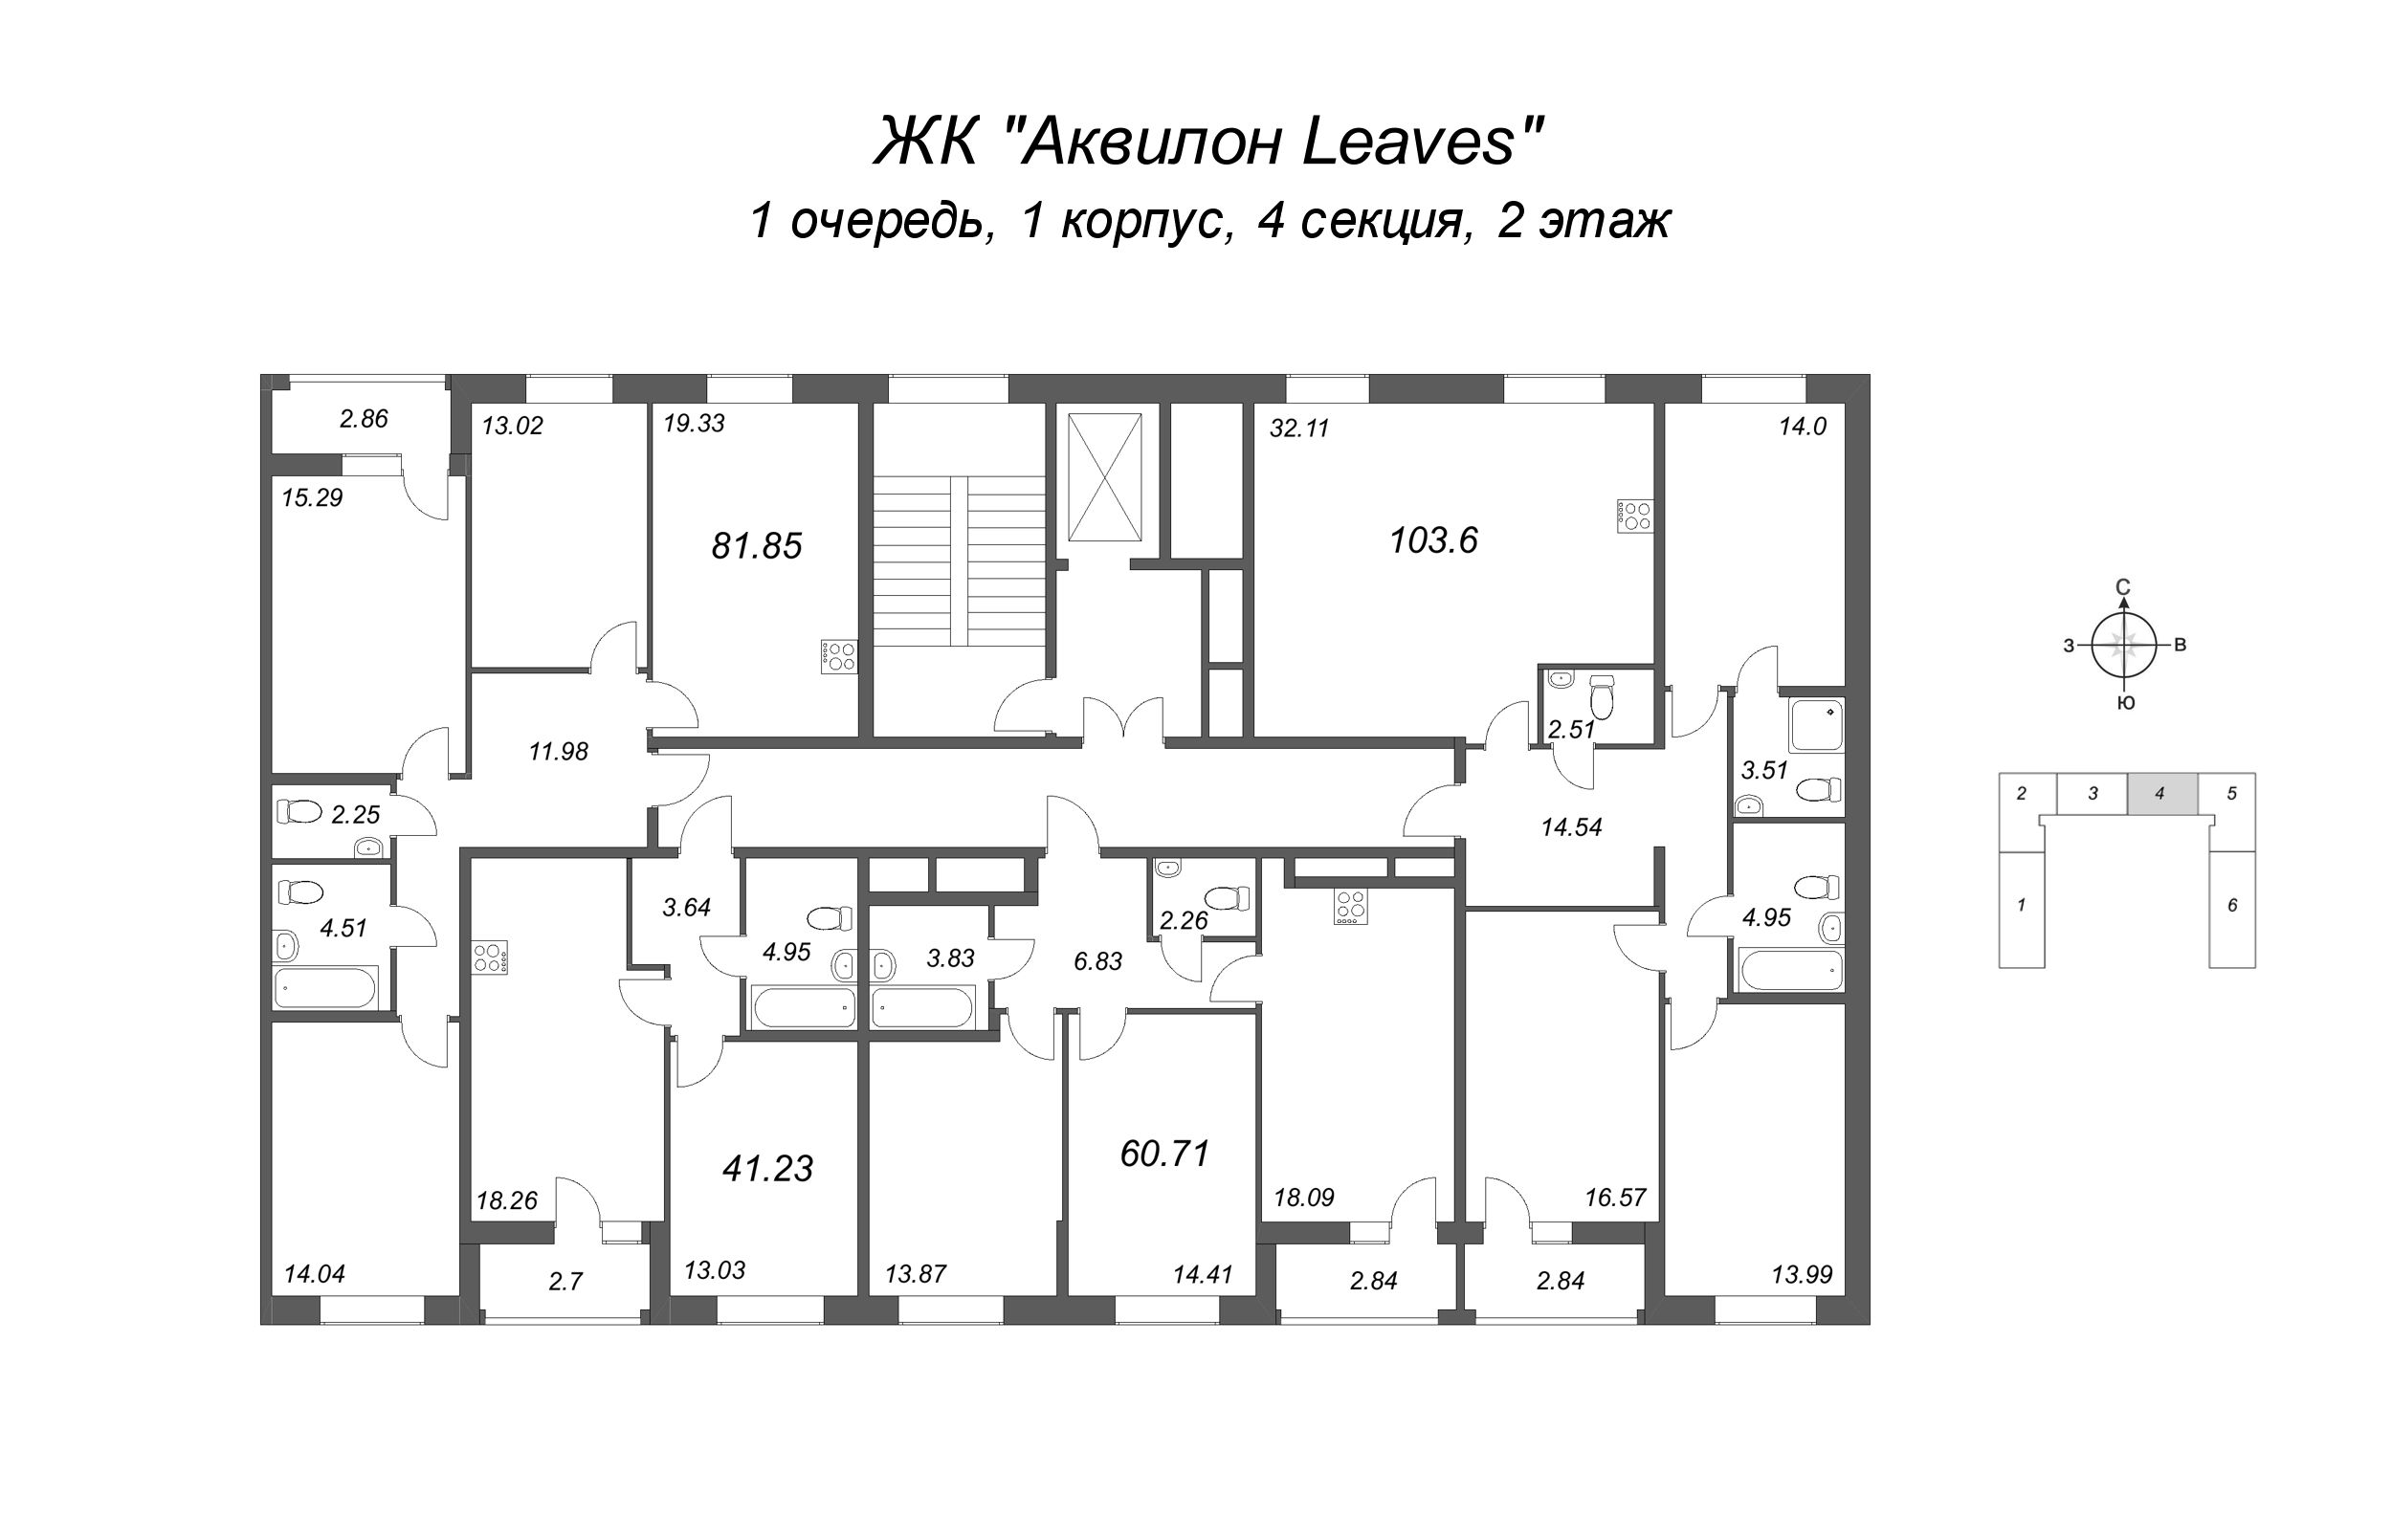 2-комнатная (Евро) квартира, 41.23 м² - планировка этажа